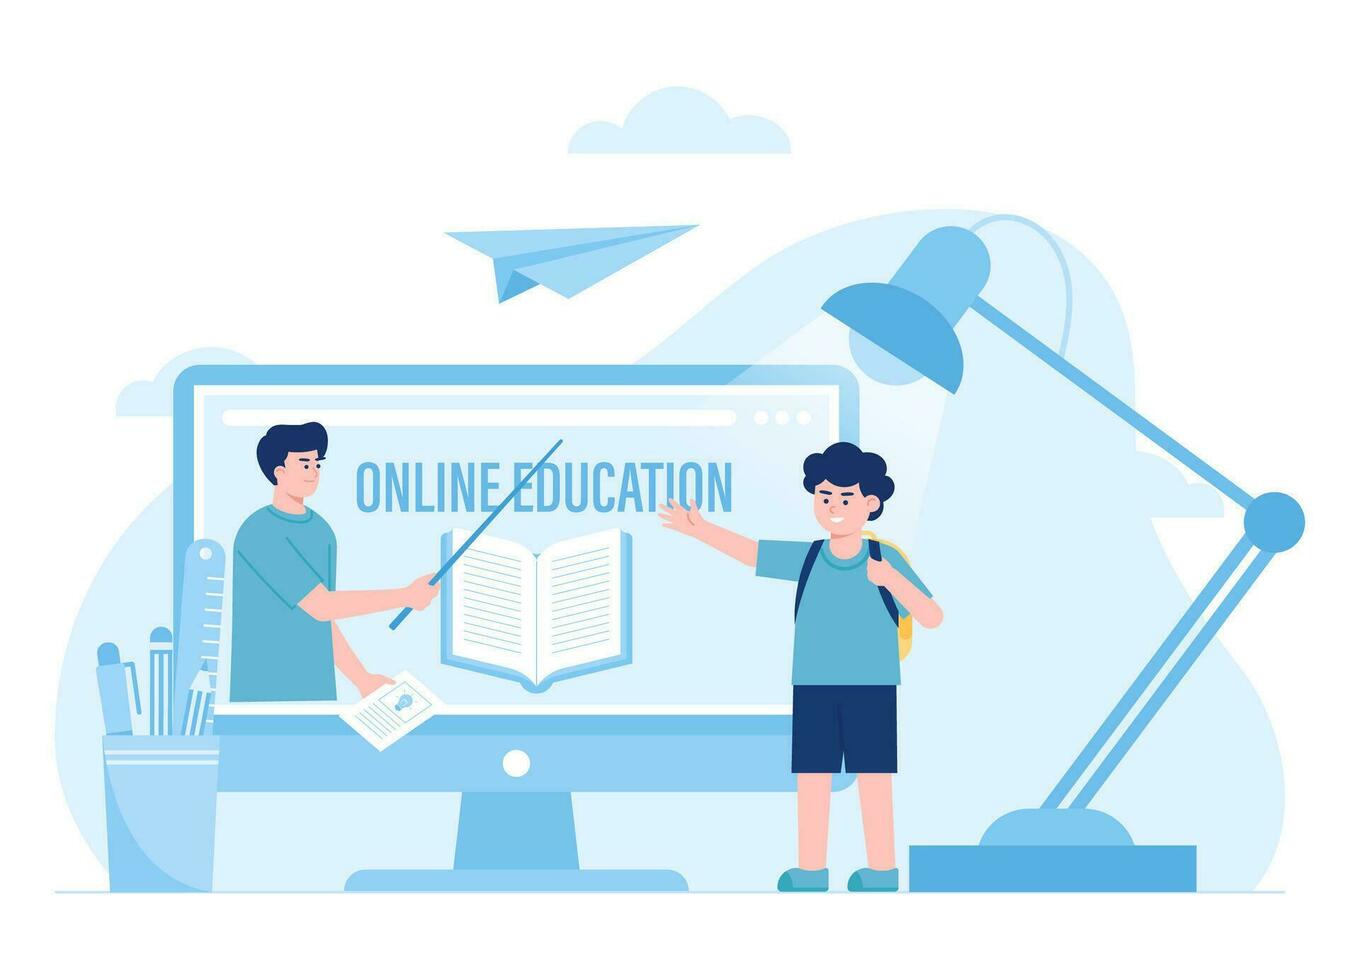 online education for children via computer concept flat illustration vector